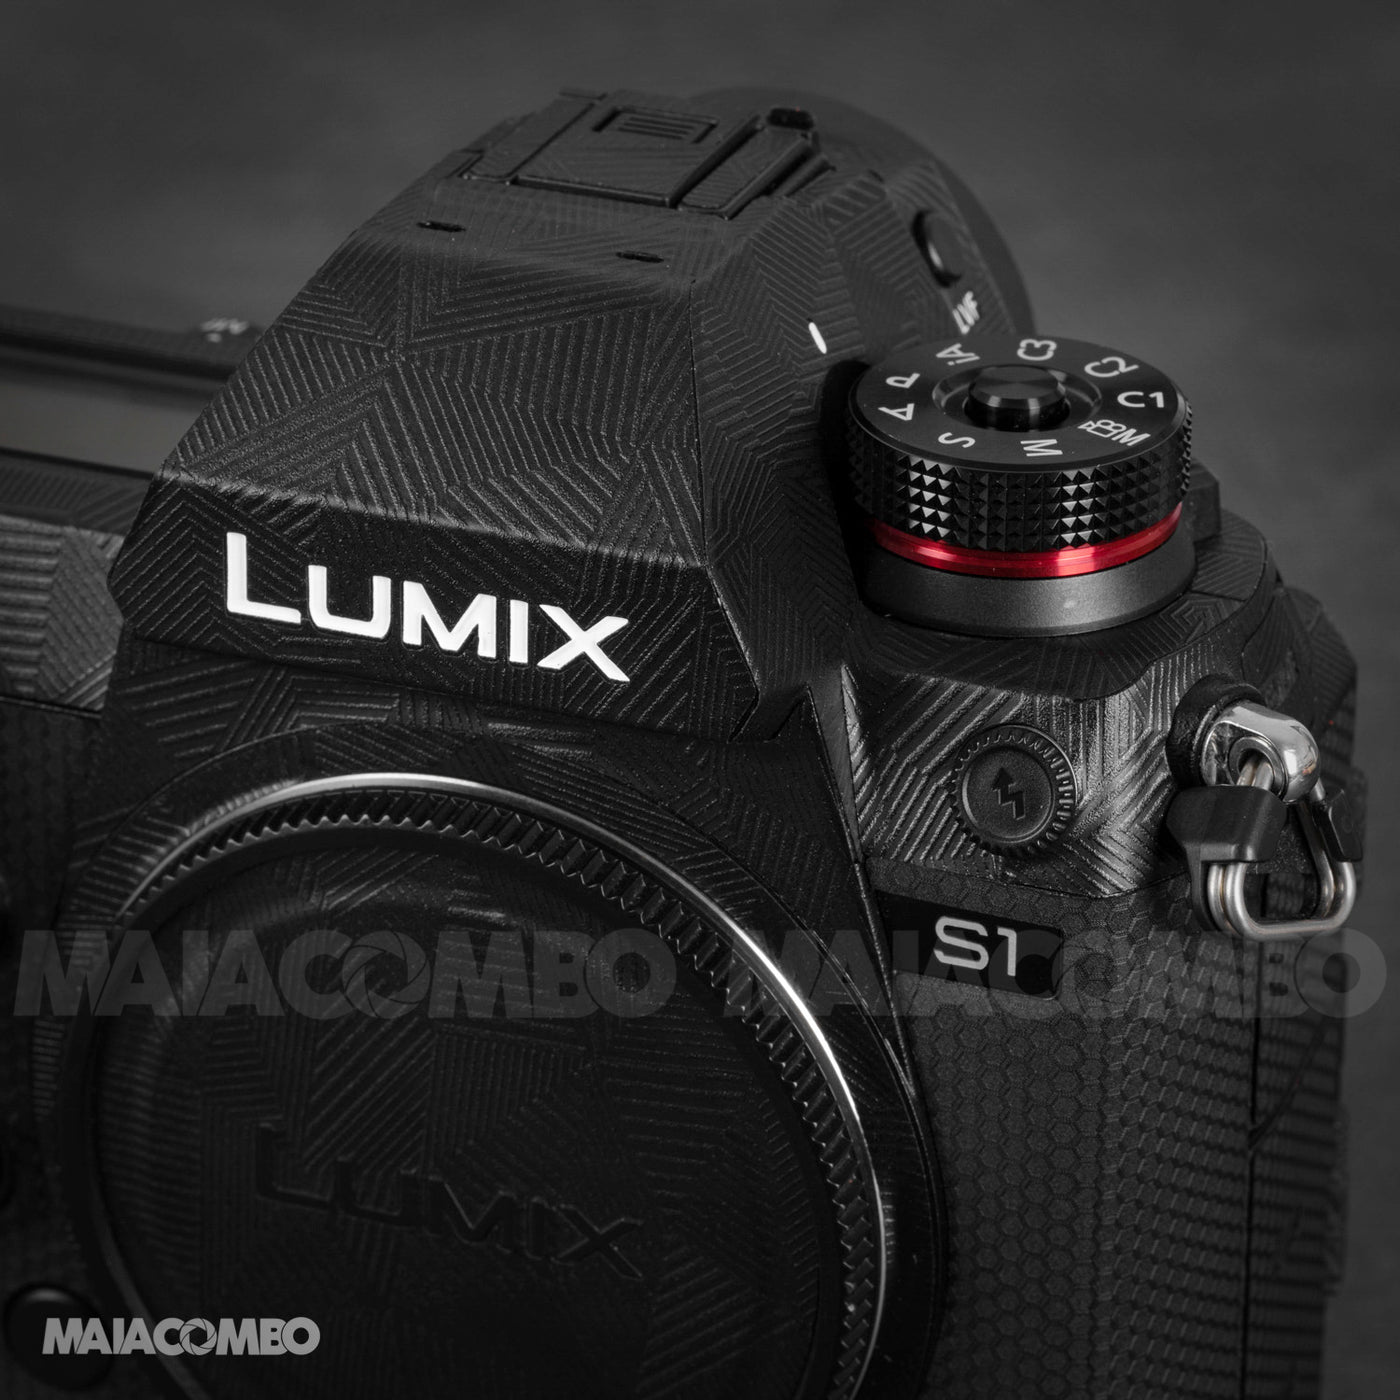 PANASONIC Lumix DC-S1 / S1R Camera Skin/ Wrap